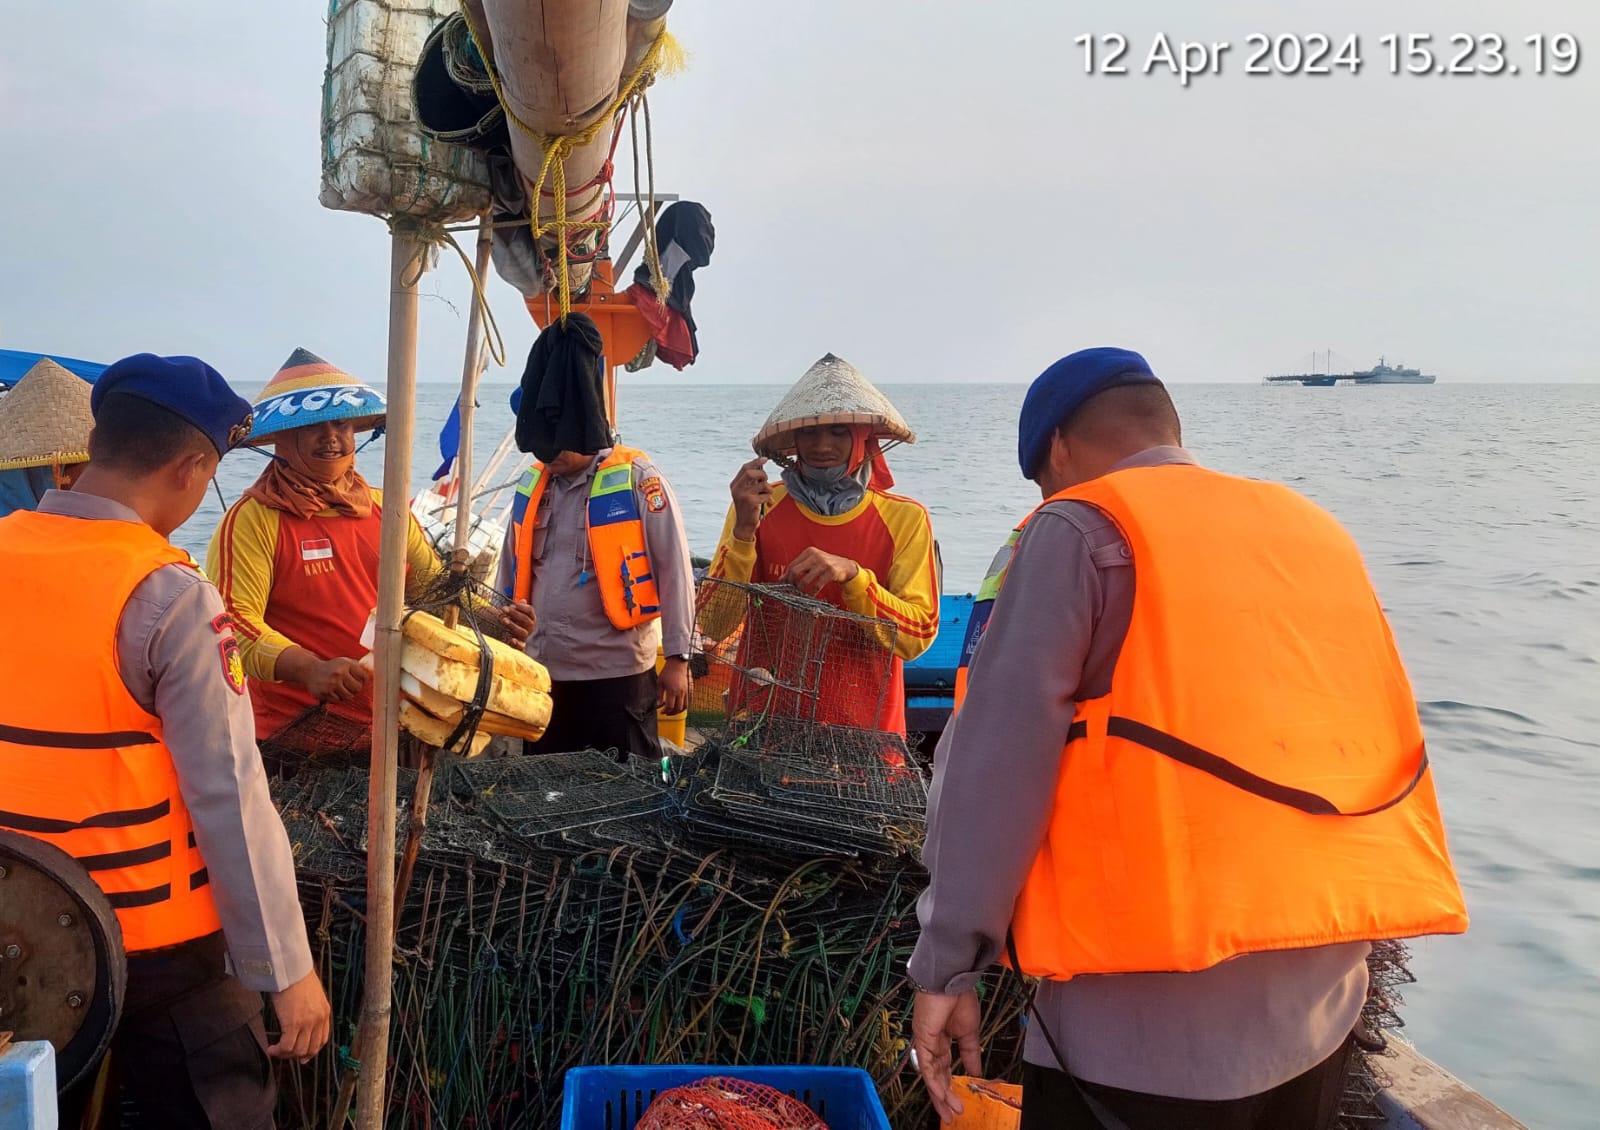 Patroli Satpolairud Polres Kepulauan Seribu: Giat Dialogis di Laut, Himbau Keselamatan Nelayan, dan Antisipasi Kejahatan